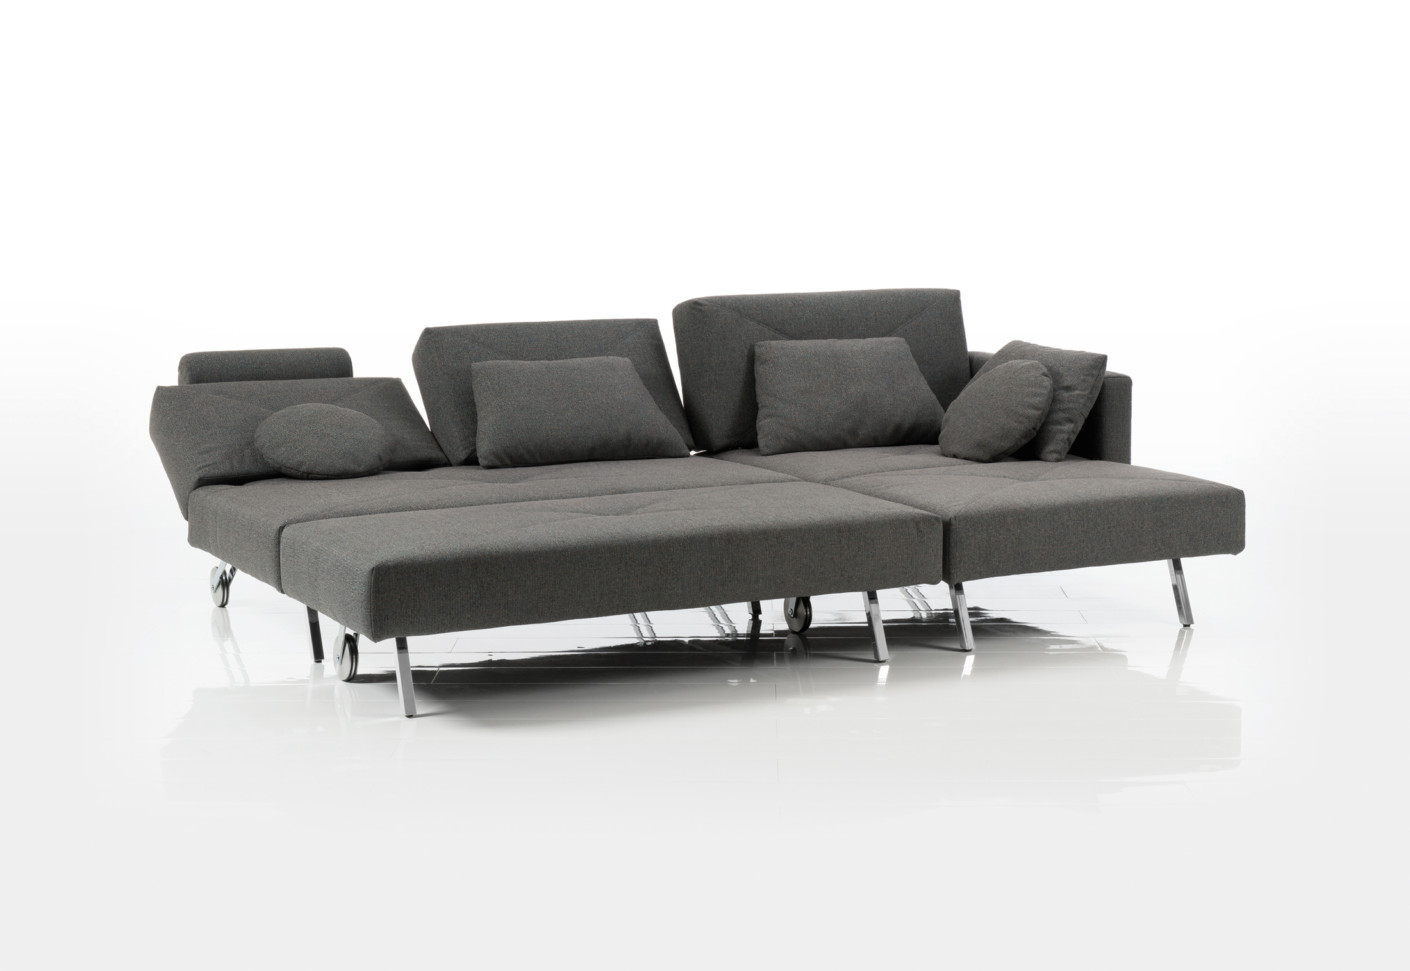 Сoncert Sofa Collection by Brühl